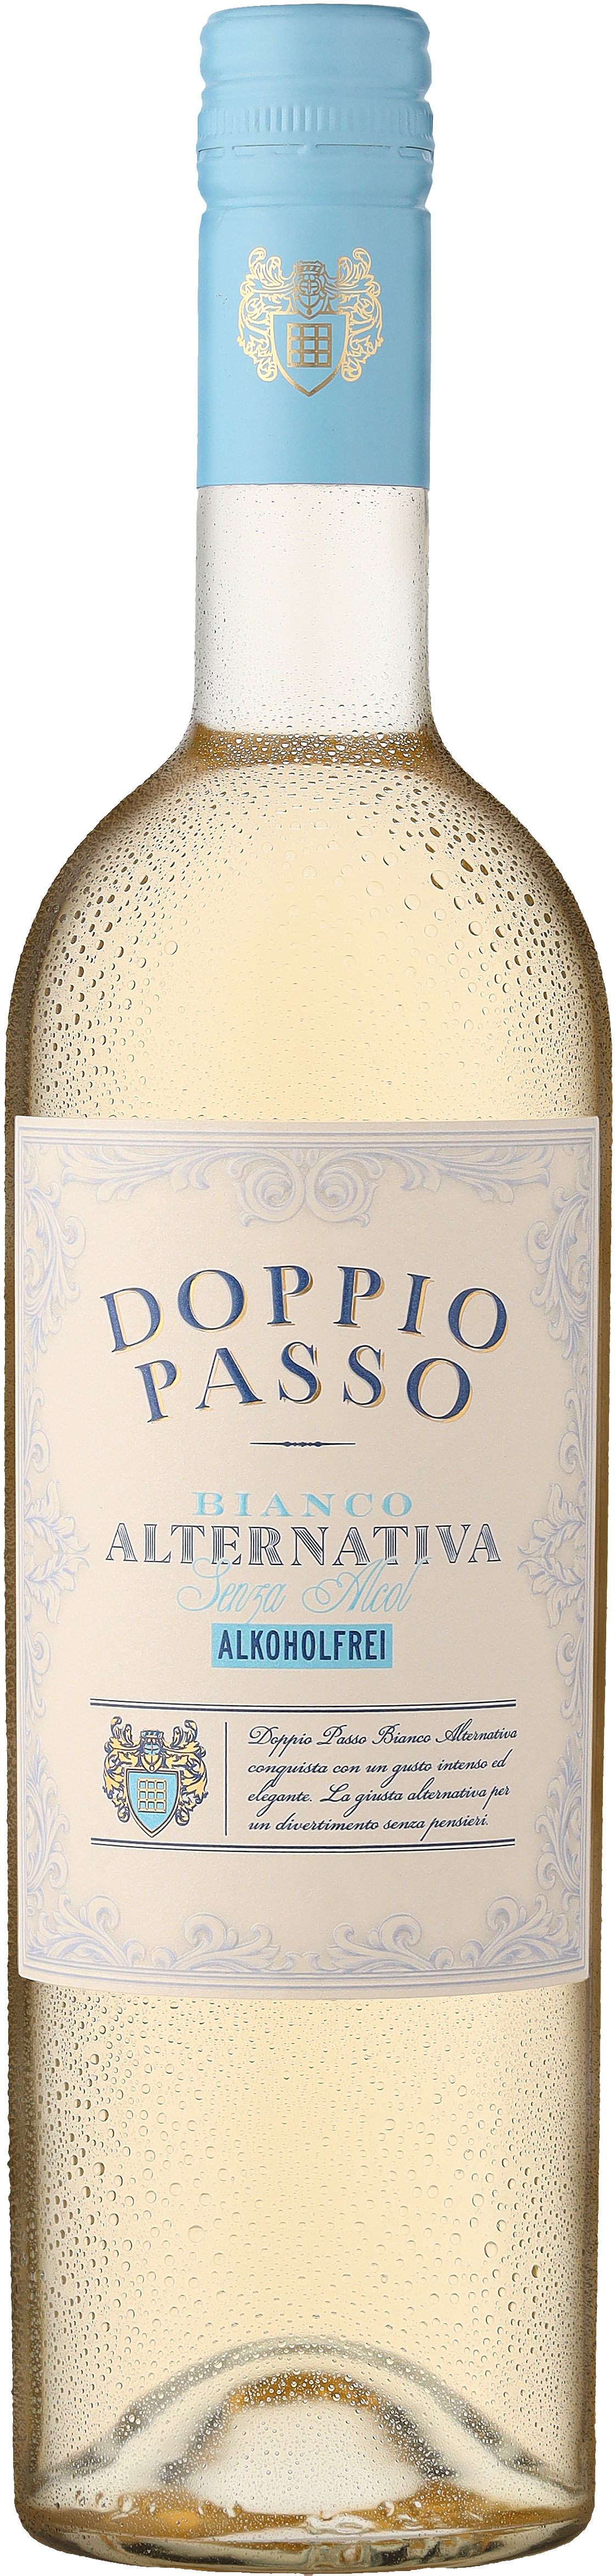 Doppio Passo Bianco »Alternativa« Alkoholfrei von Botter Casa Vinicola S.P.A.